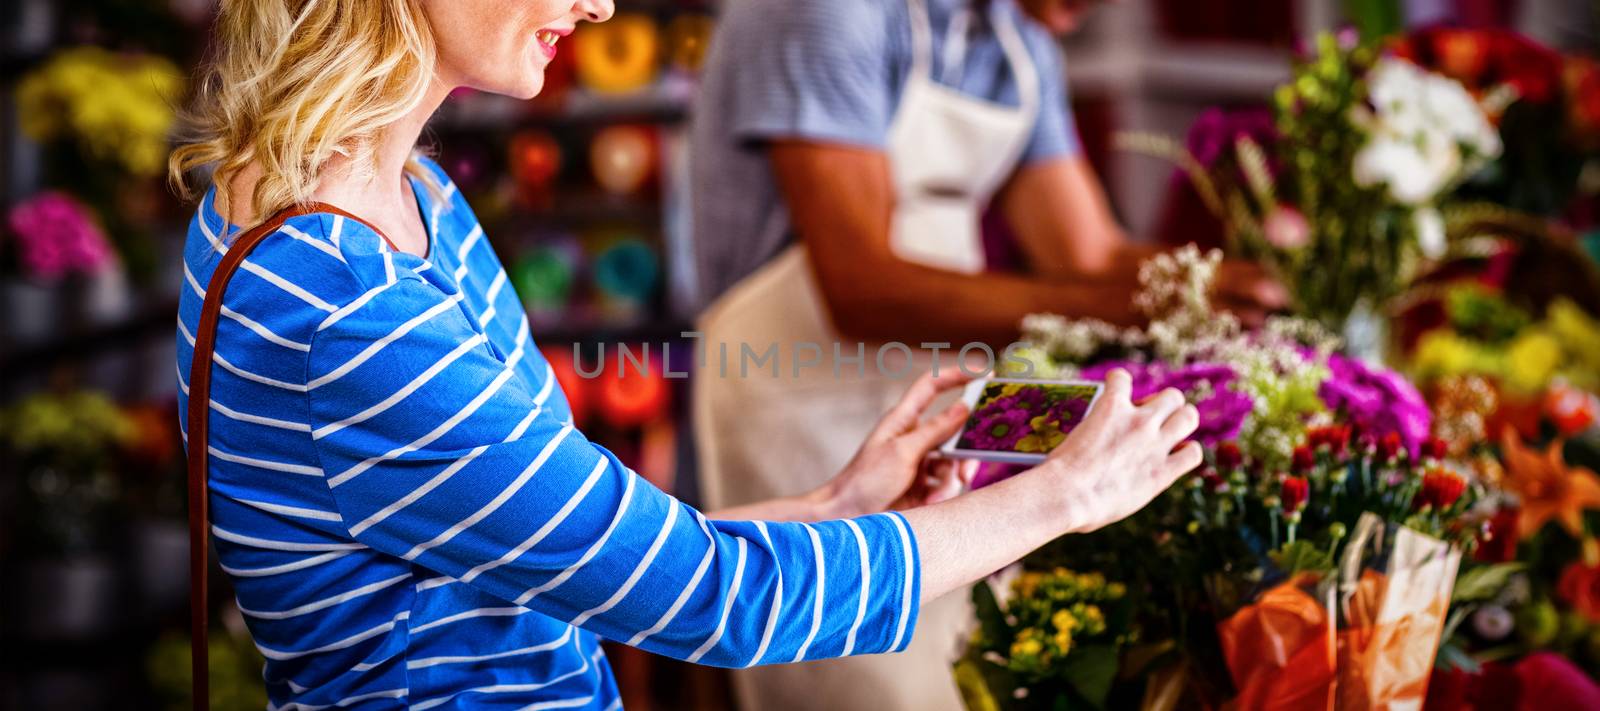 Woman taking photograph of flower bouquet in flower shop